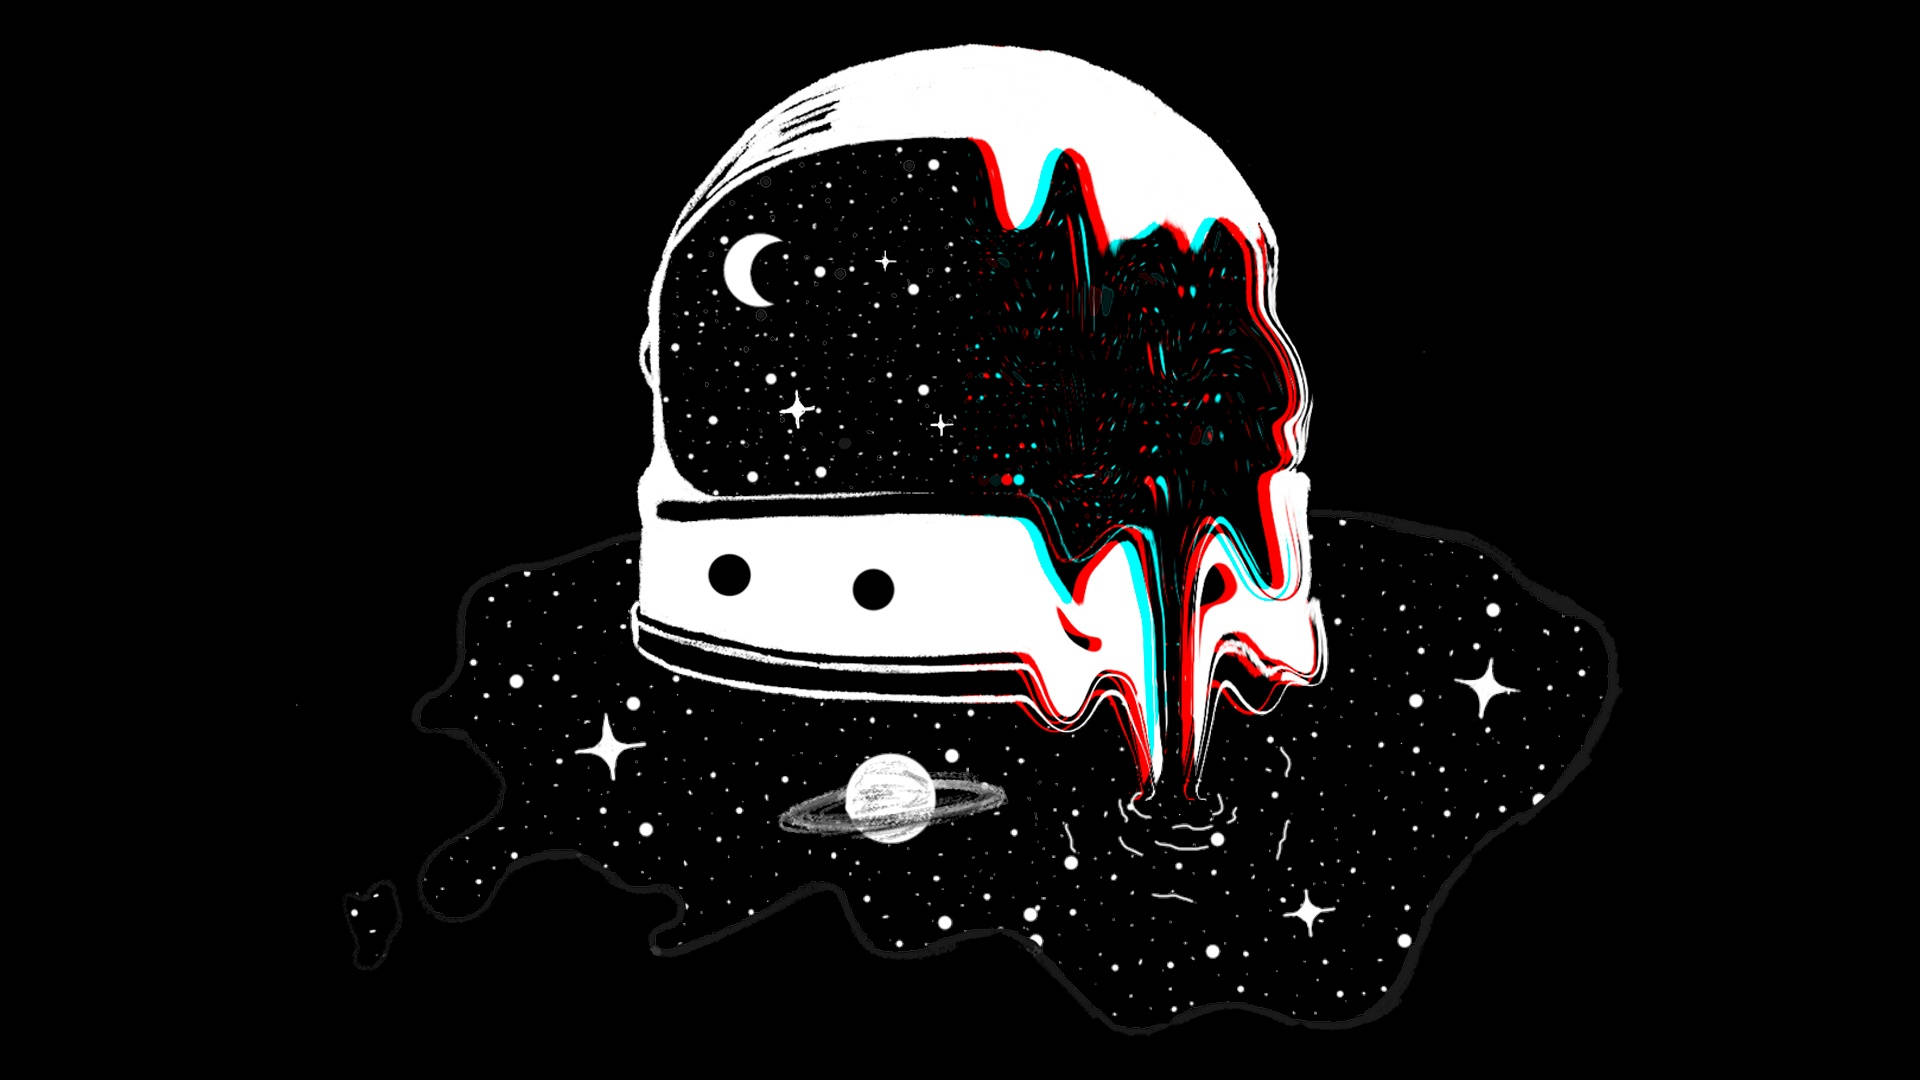 Distorted Astronaut Helmet Trippy Aesthetic Background